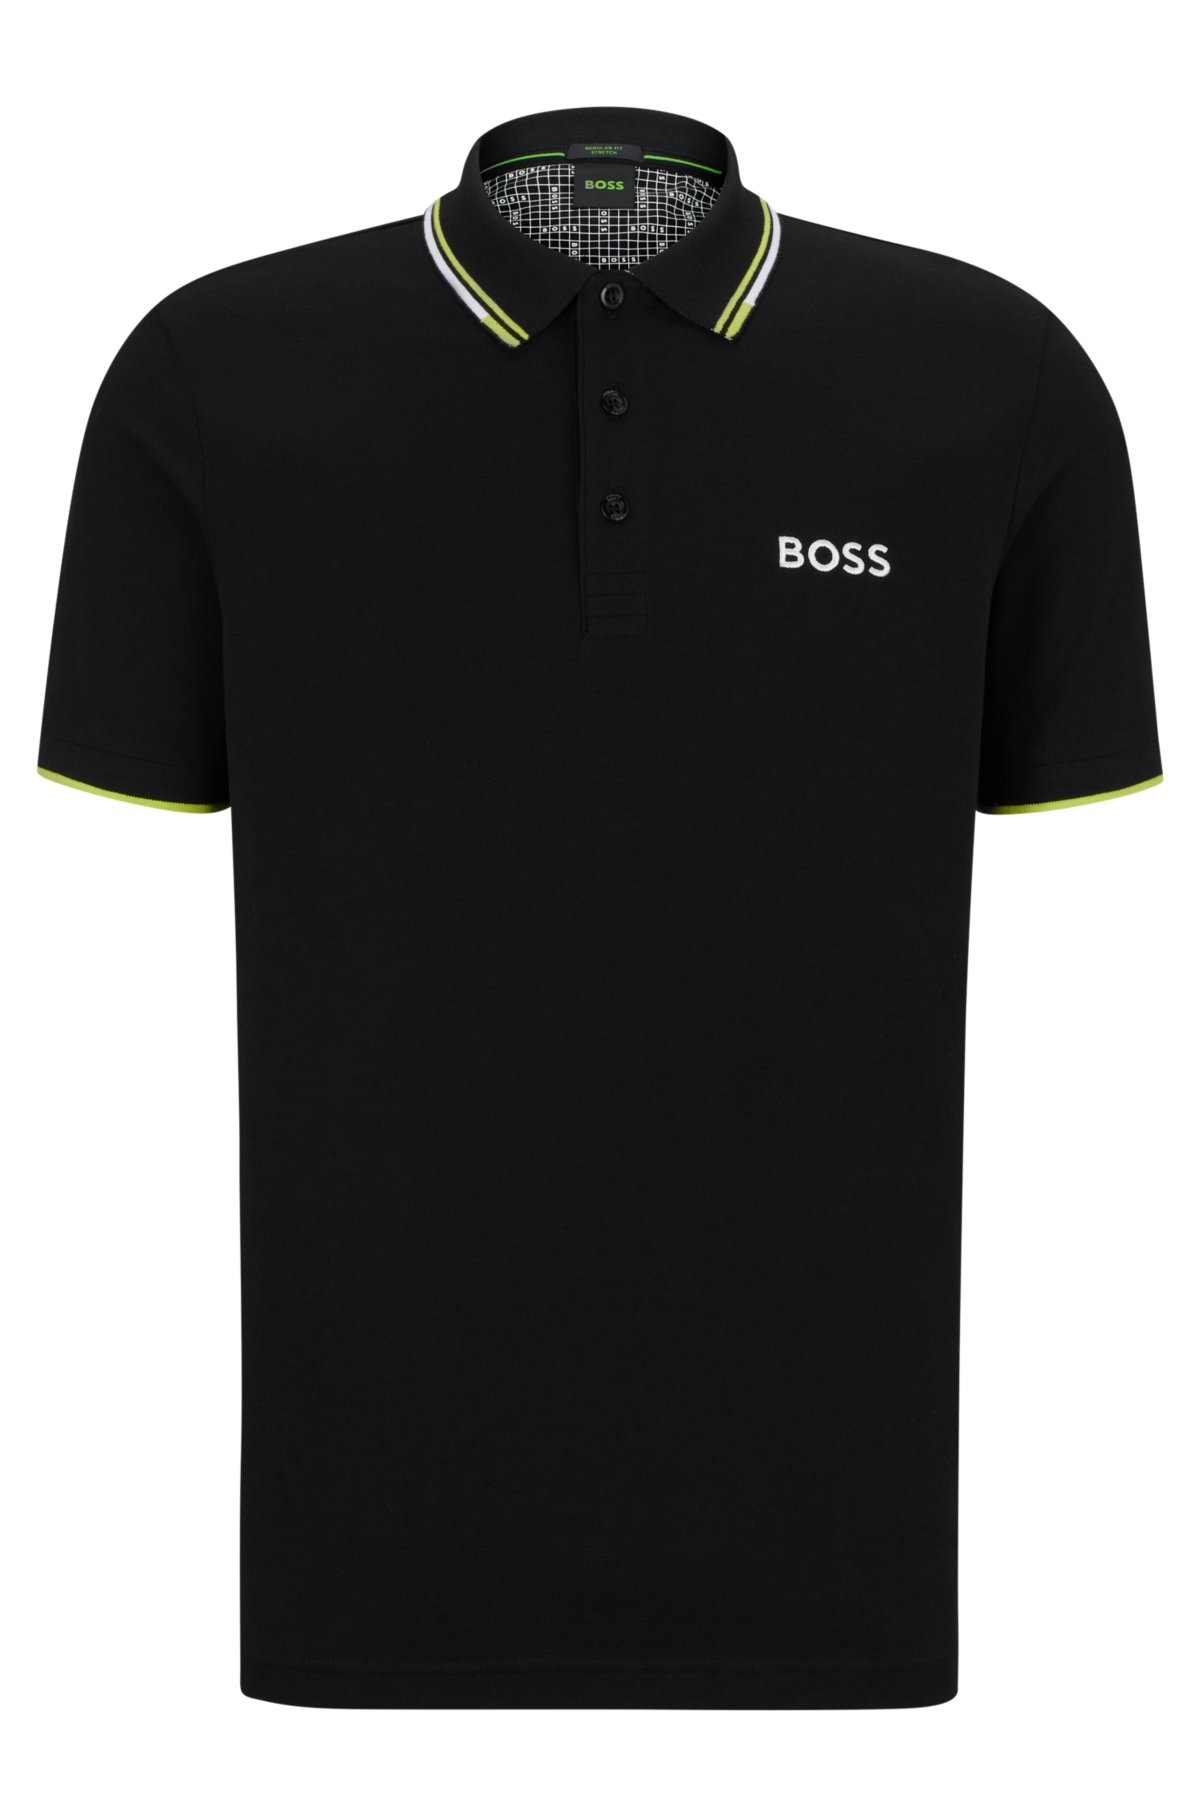 Forbløffe forbrug Clip sommerfugl BOSS - Cotton-blend polo shirt with contrast details